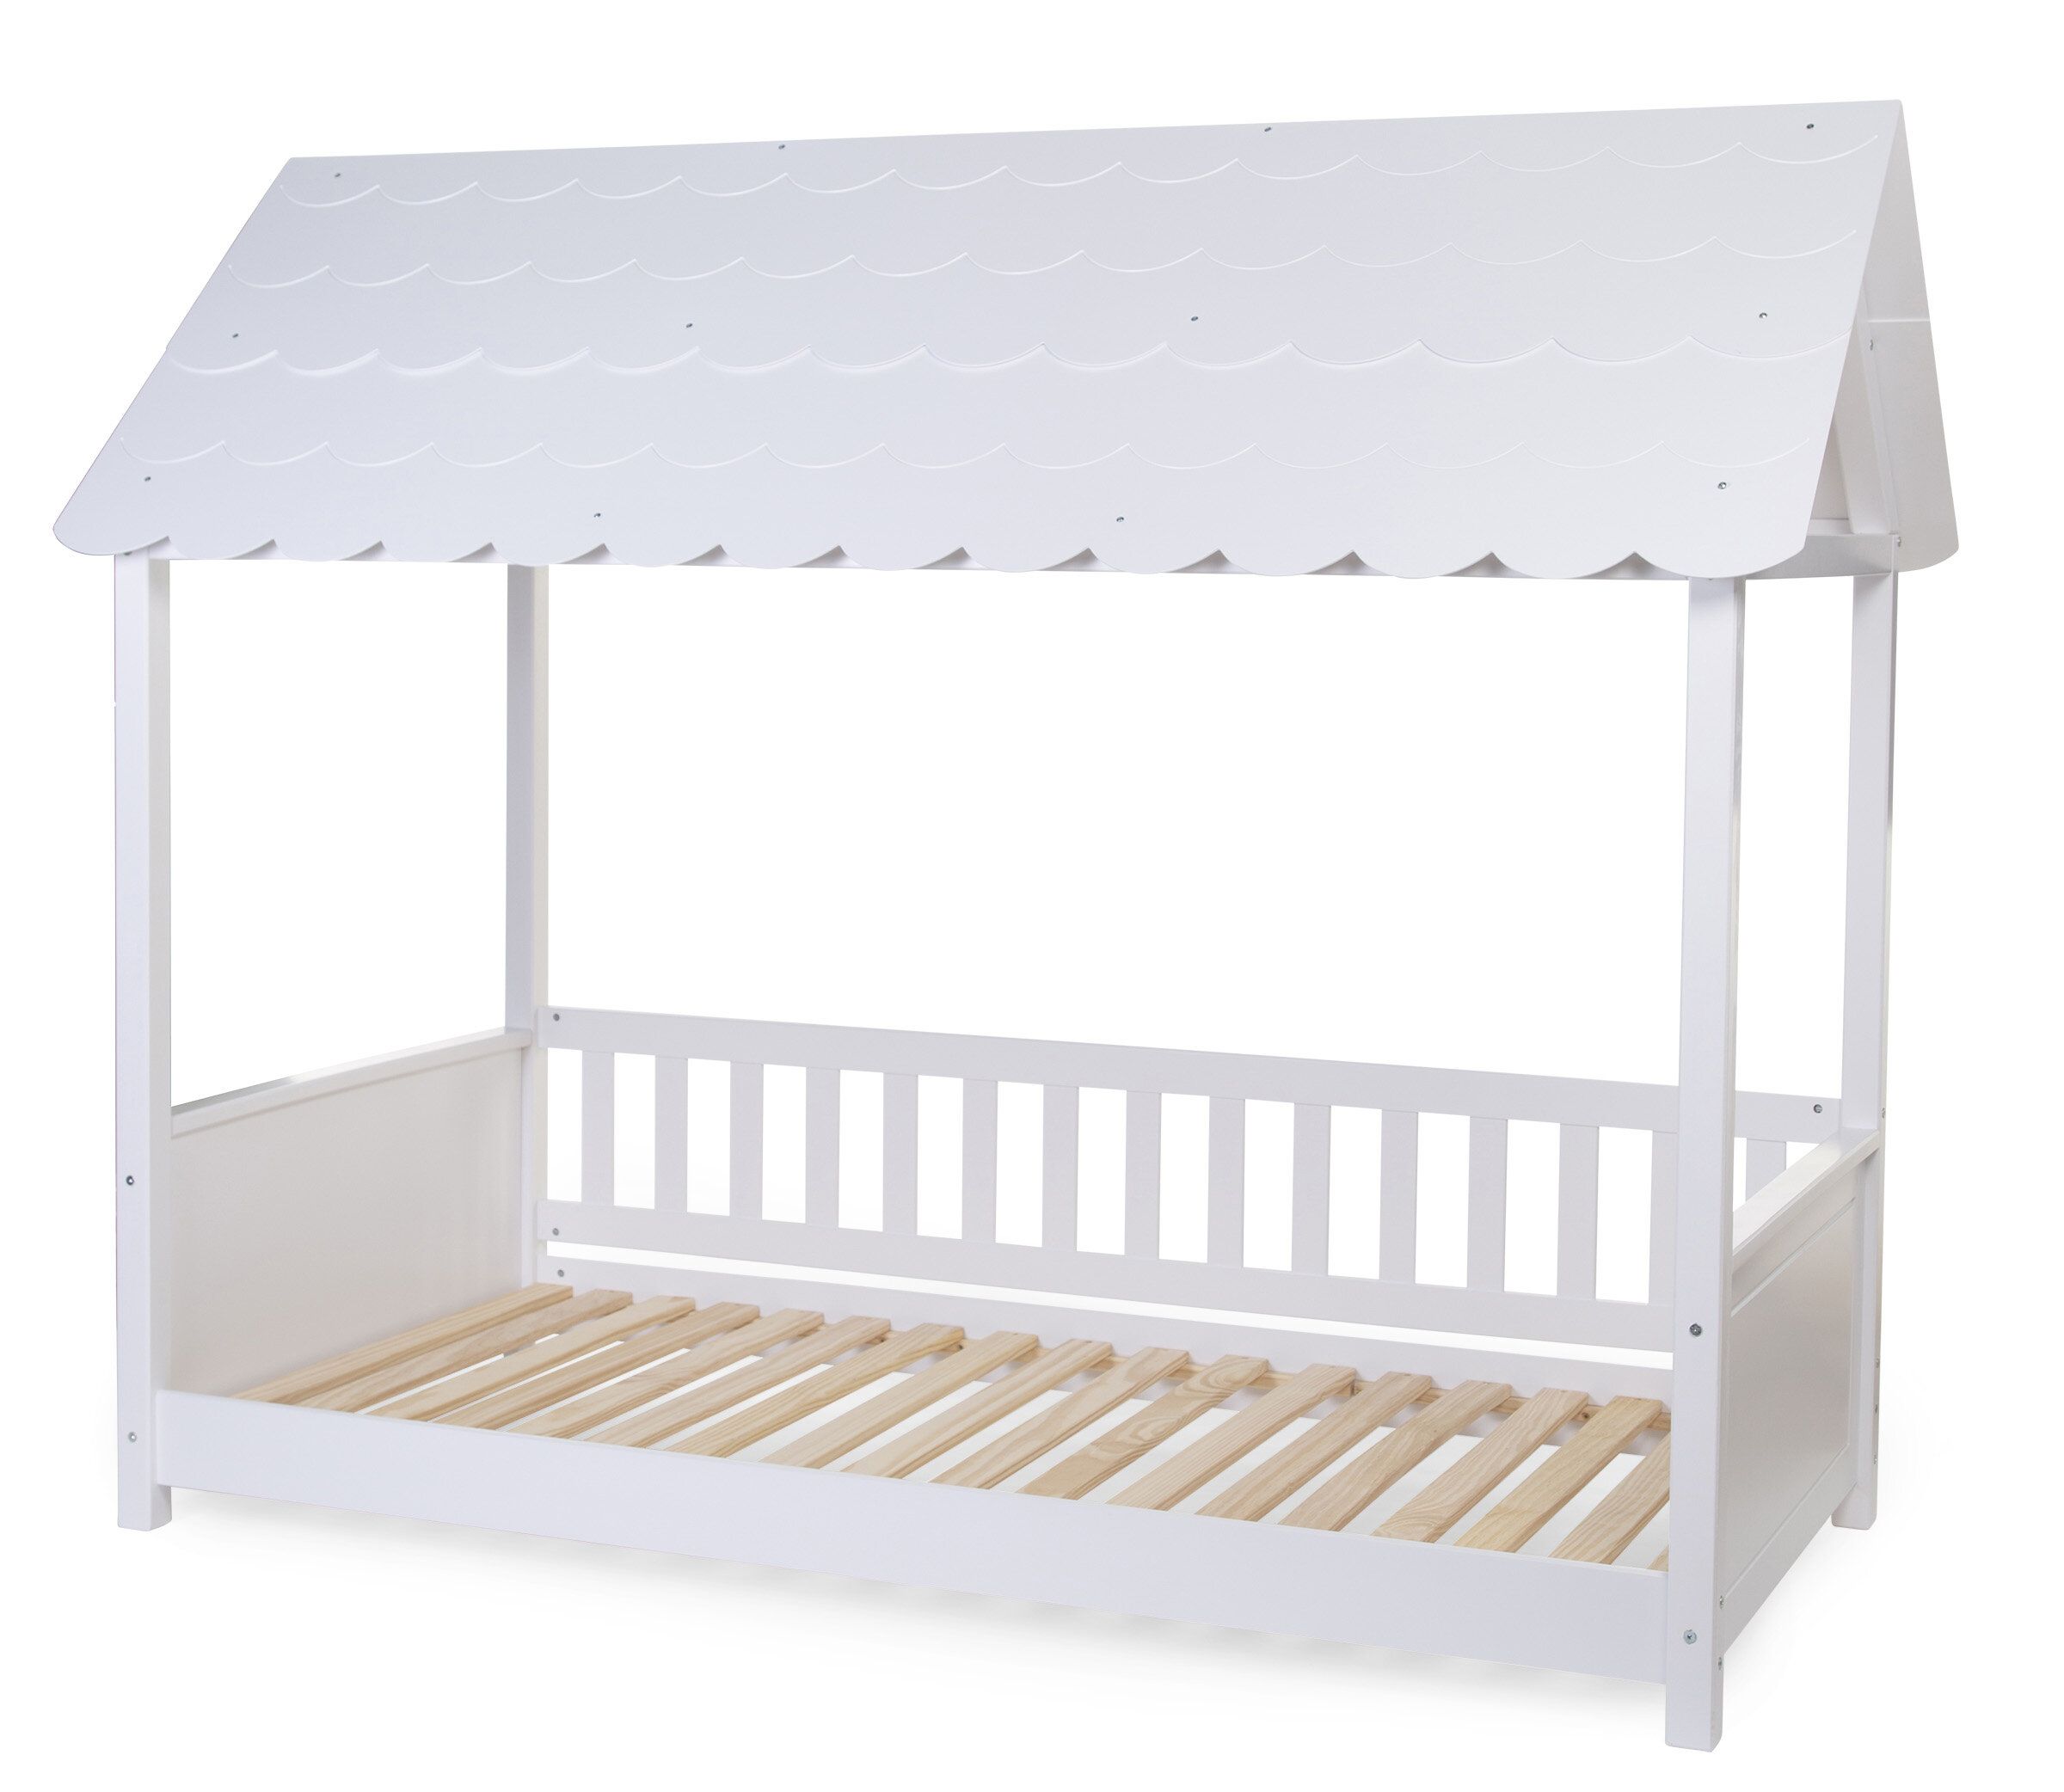 Bērnu gulta Māja ar jumtu 200x90 сm Childhome Rooftop bed frame house White